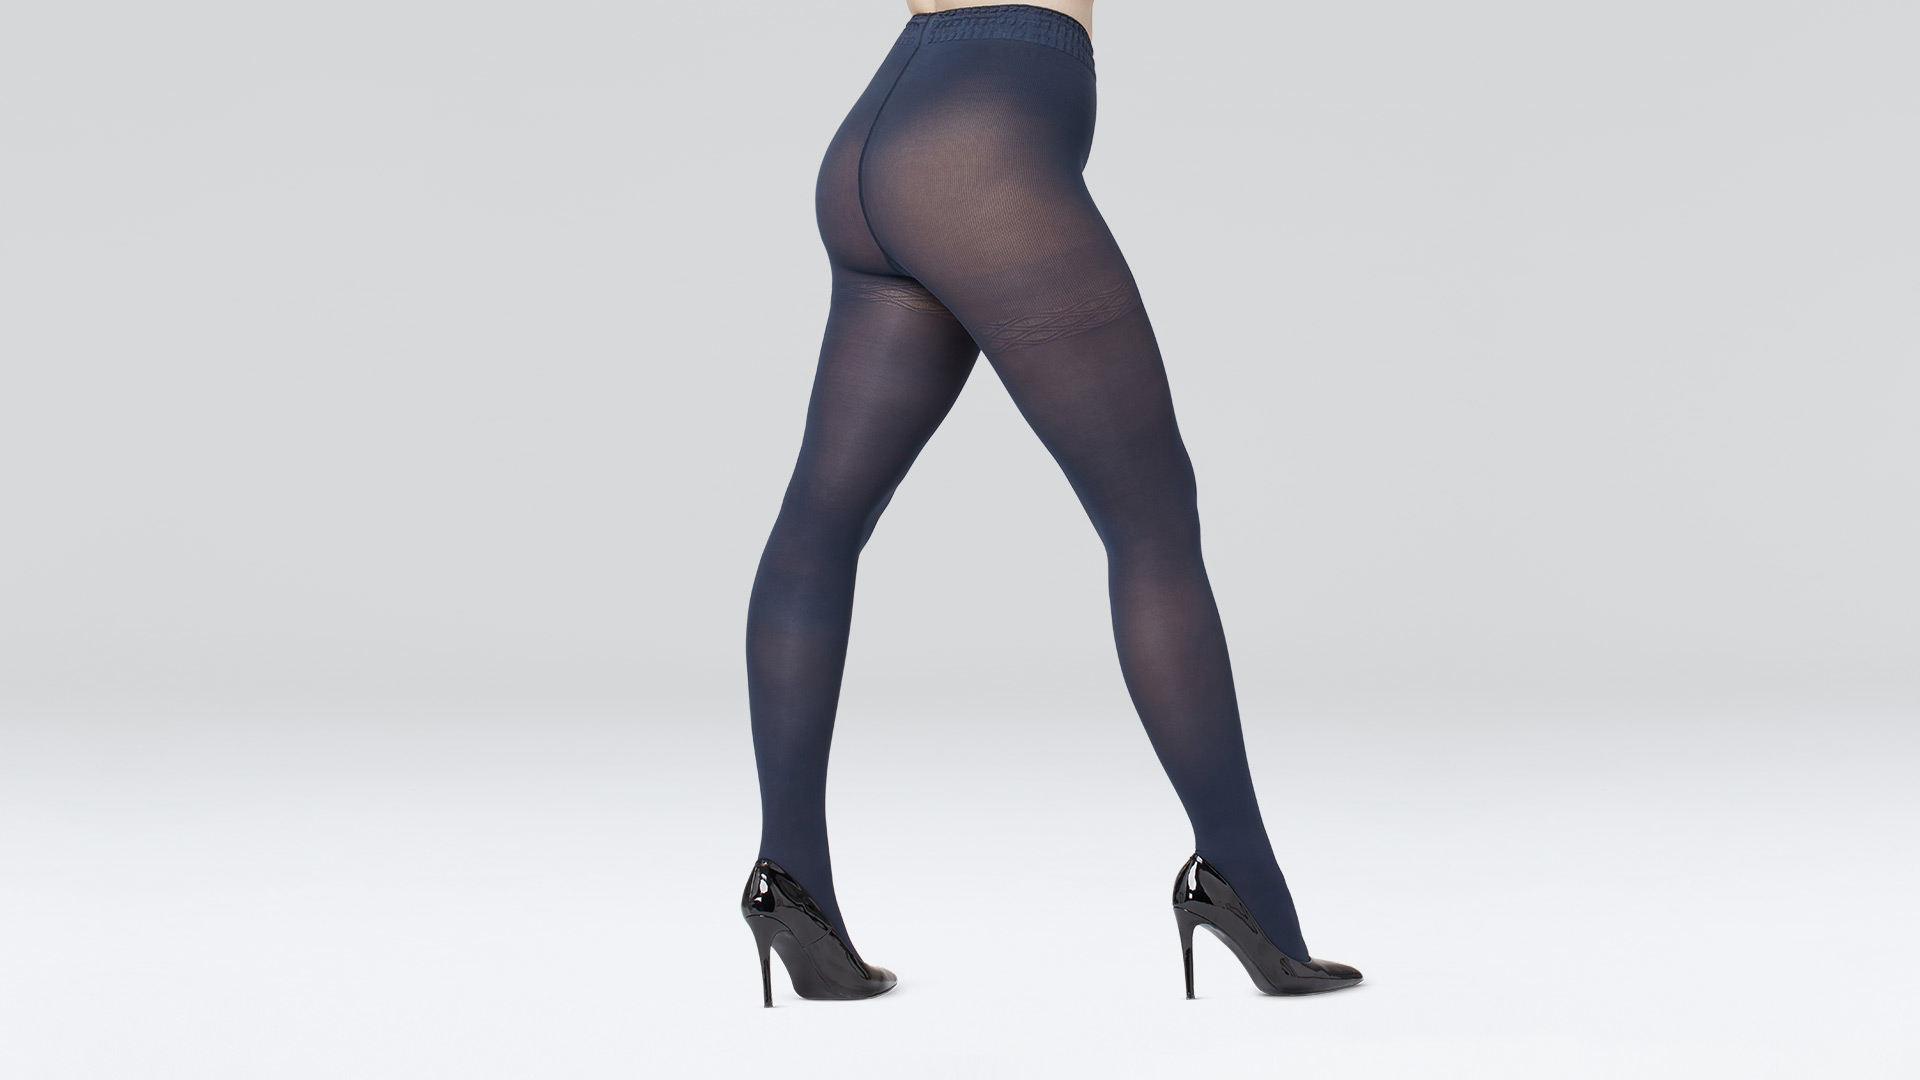 Fashion Legbeauty 34-46mmHg Medical Compression Stockings Varicose Veins  Plus Size Hose Women-Black